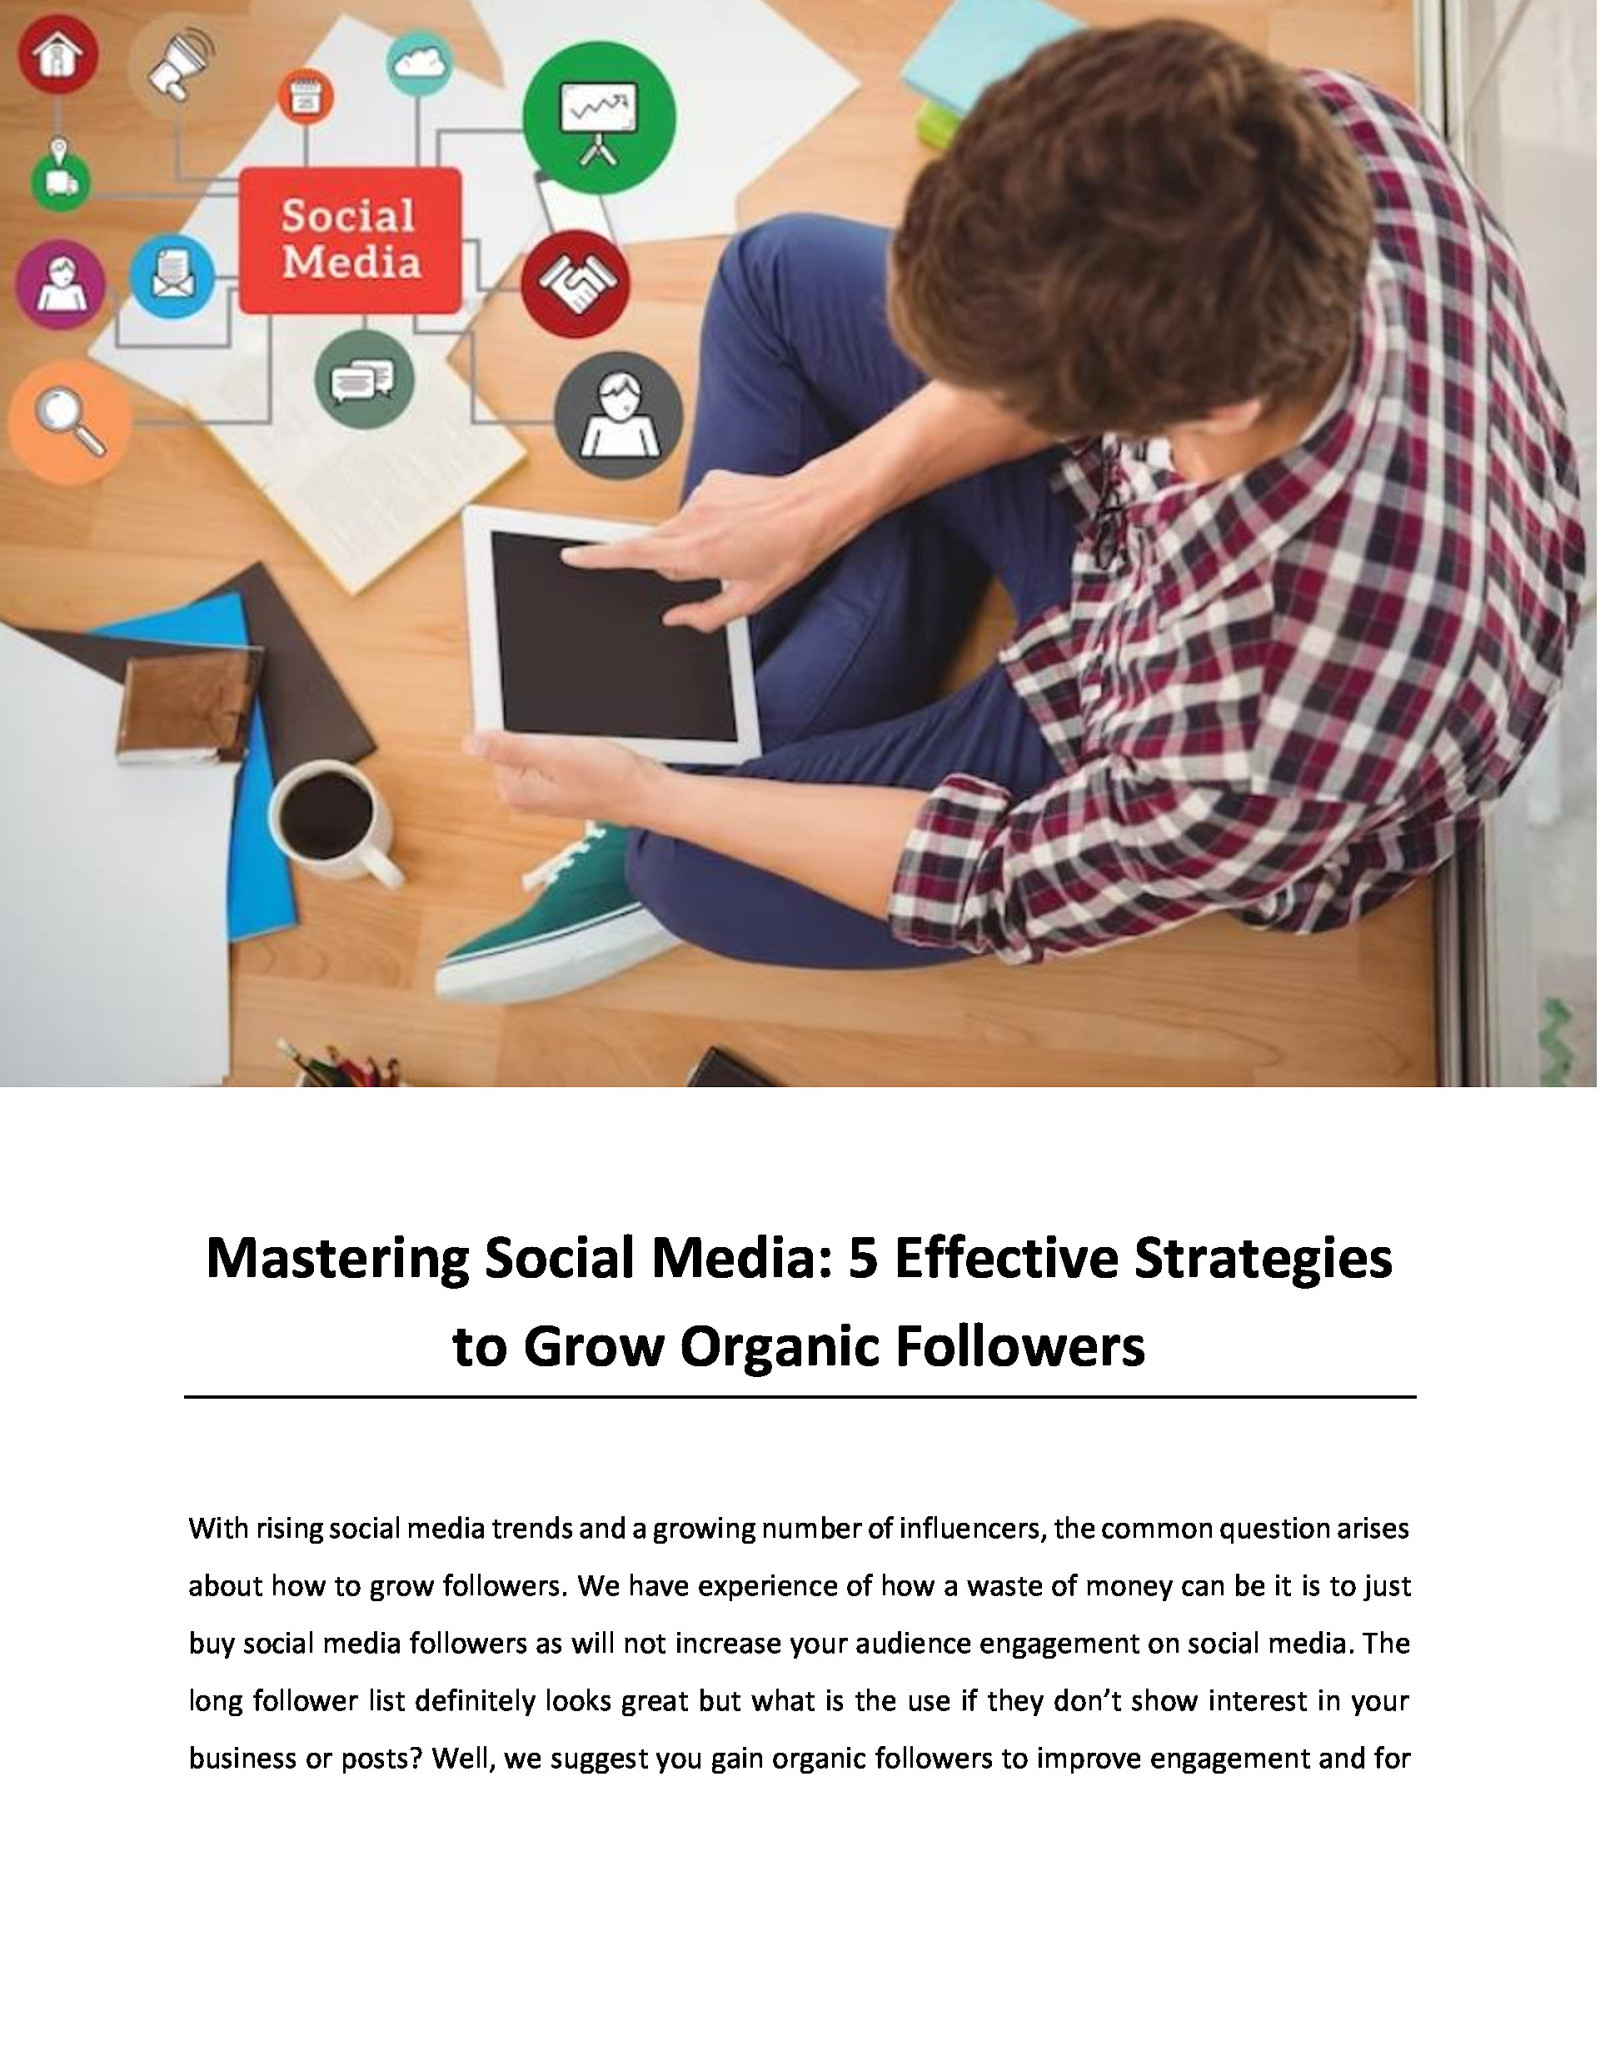 Mastering Social Media: 5 Effective Strategies to Grow Organic Followers